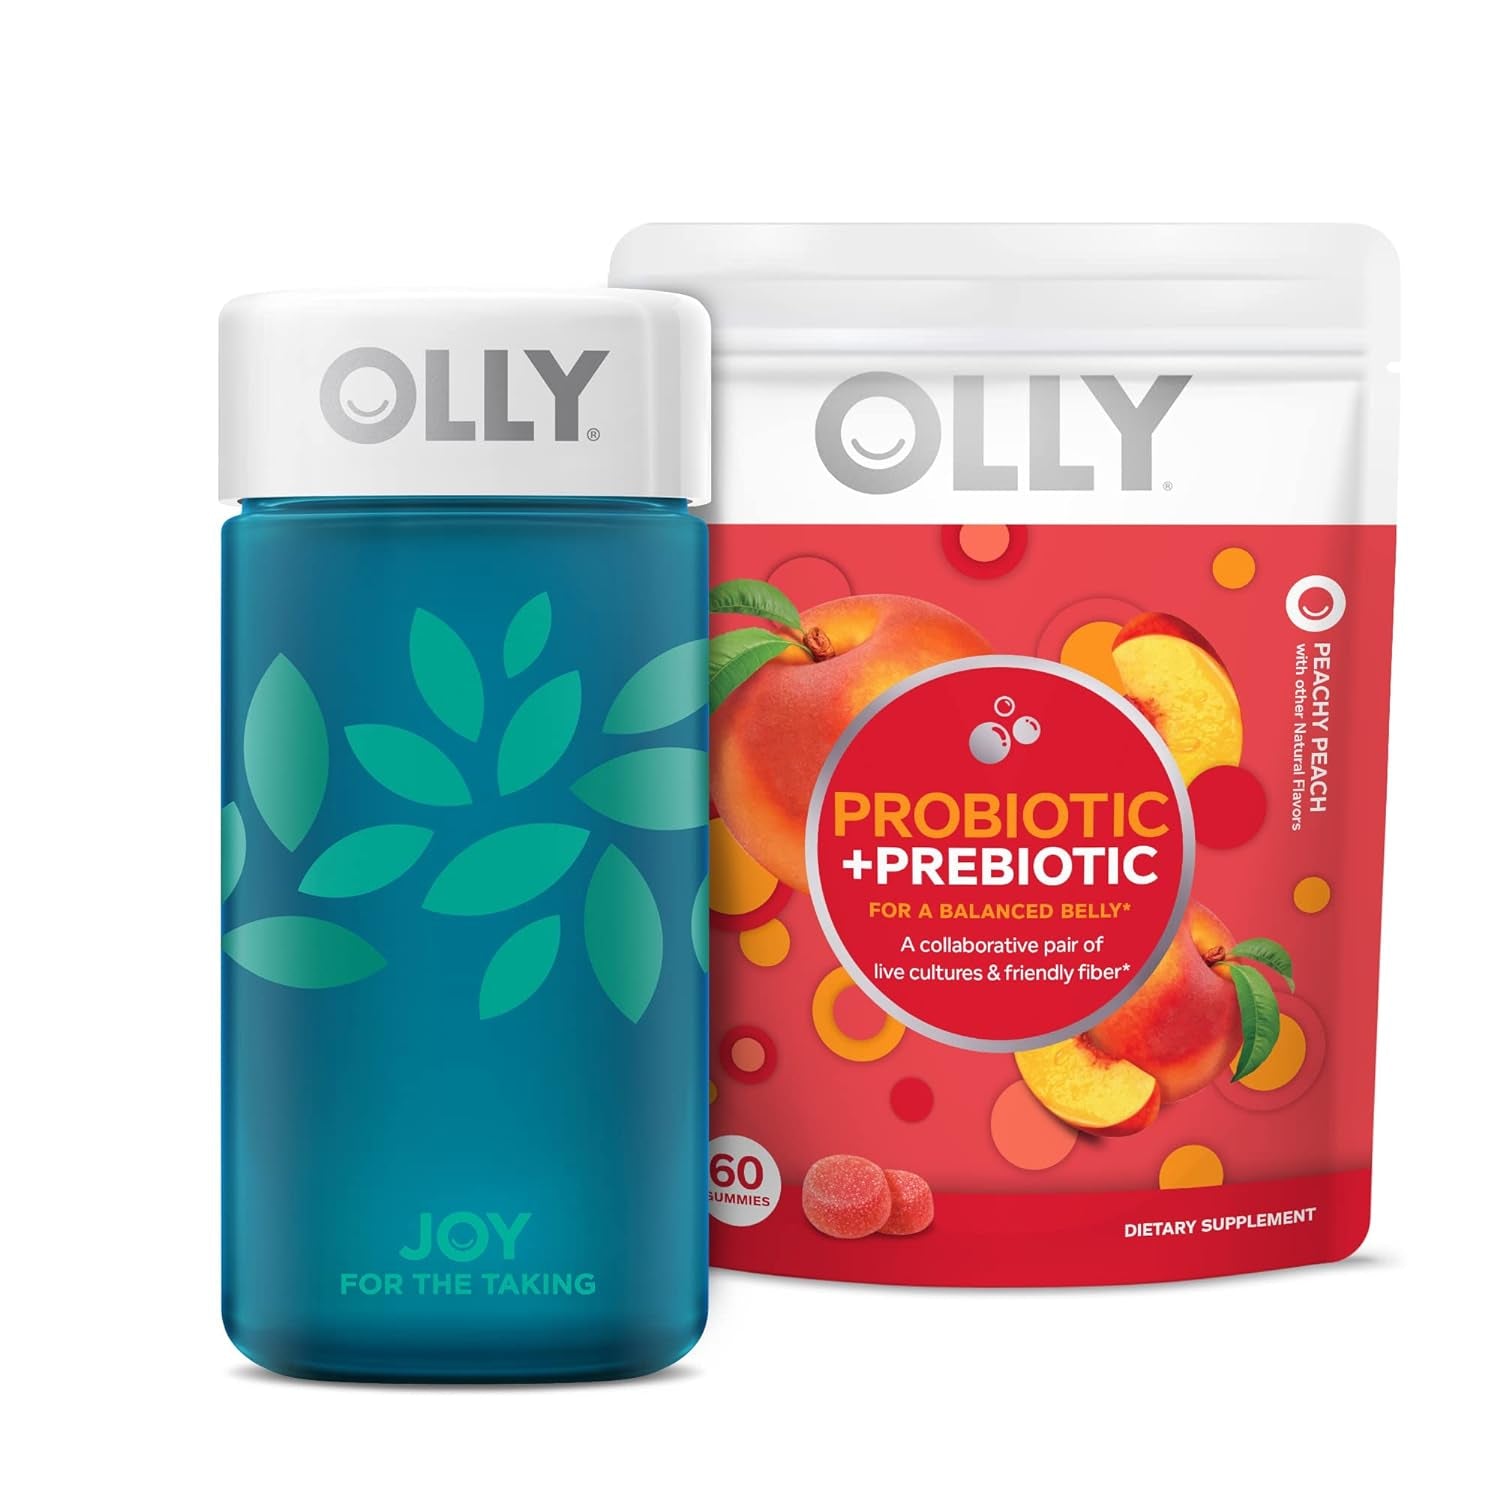 OLLY Gift Set, Probiotic + Prebiotic plus Refillable Joy Jar